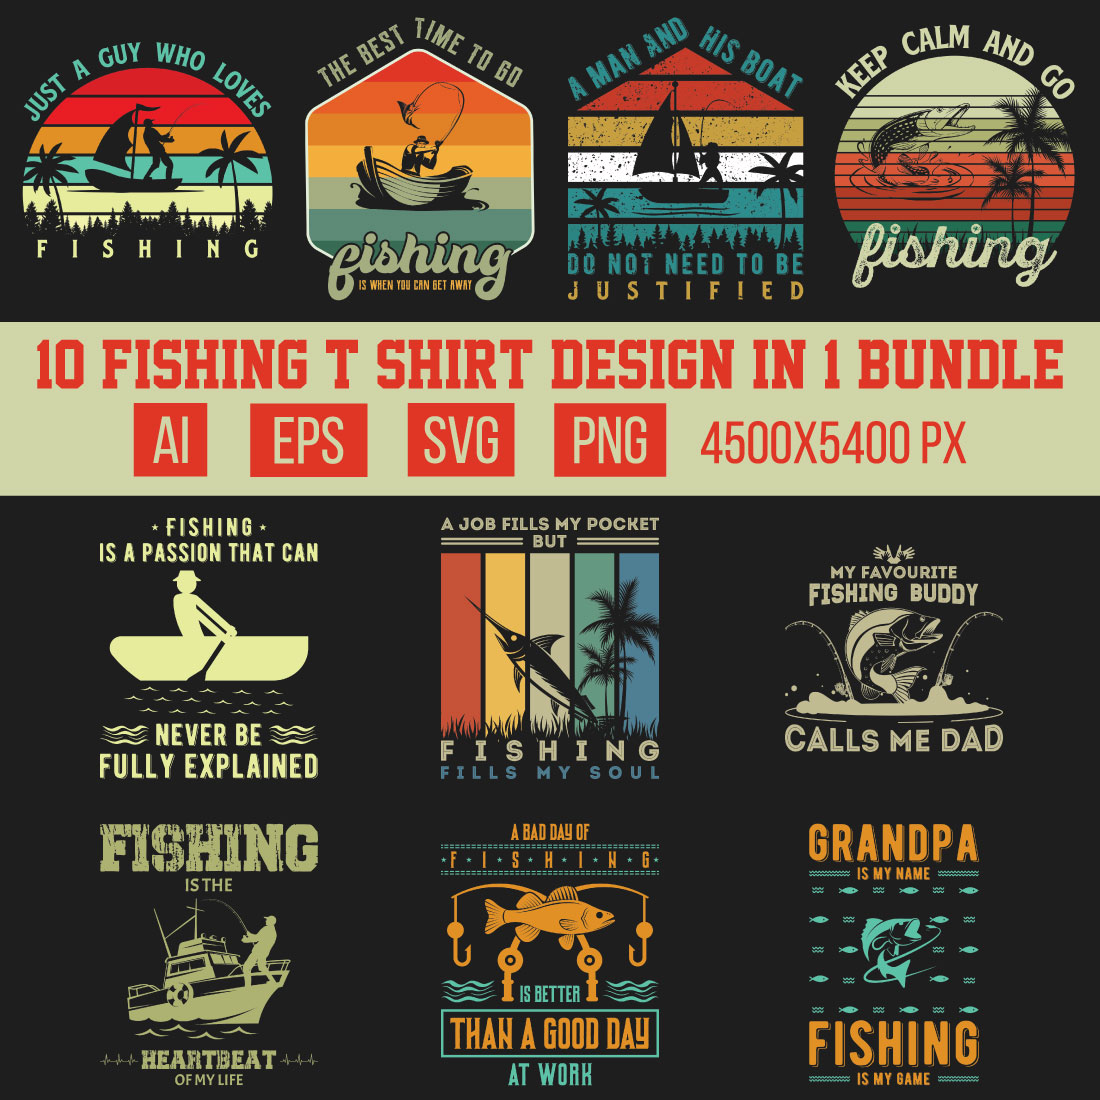 Fishing t shirt designs bundle cover image.